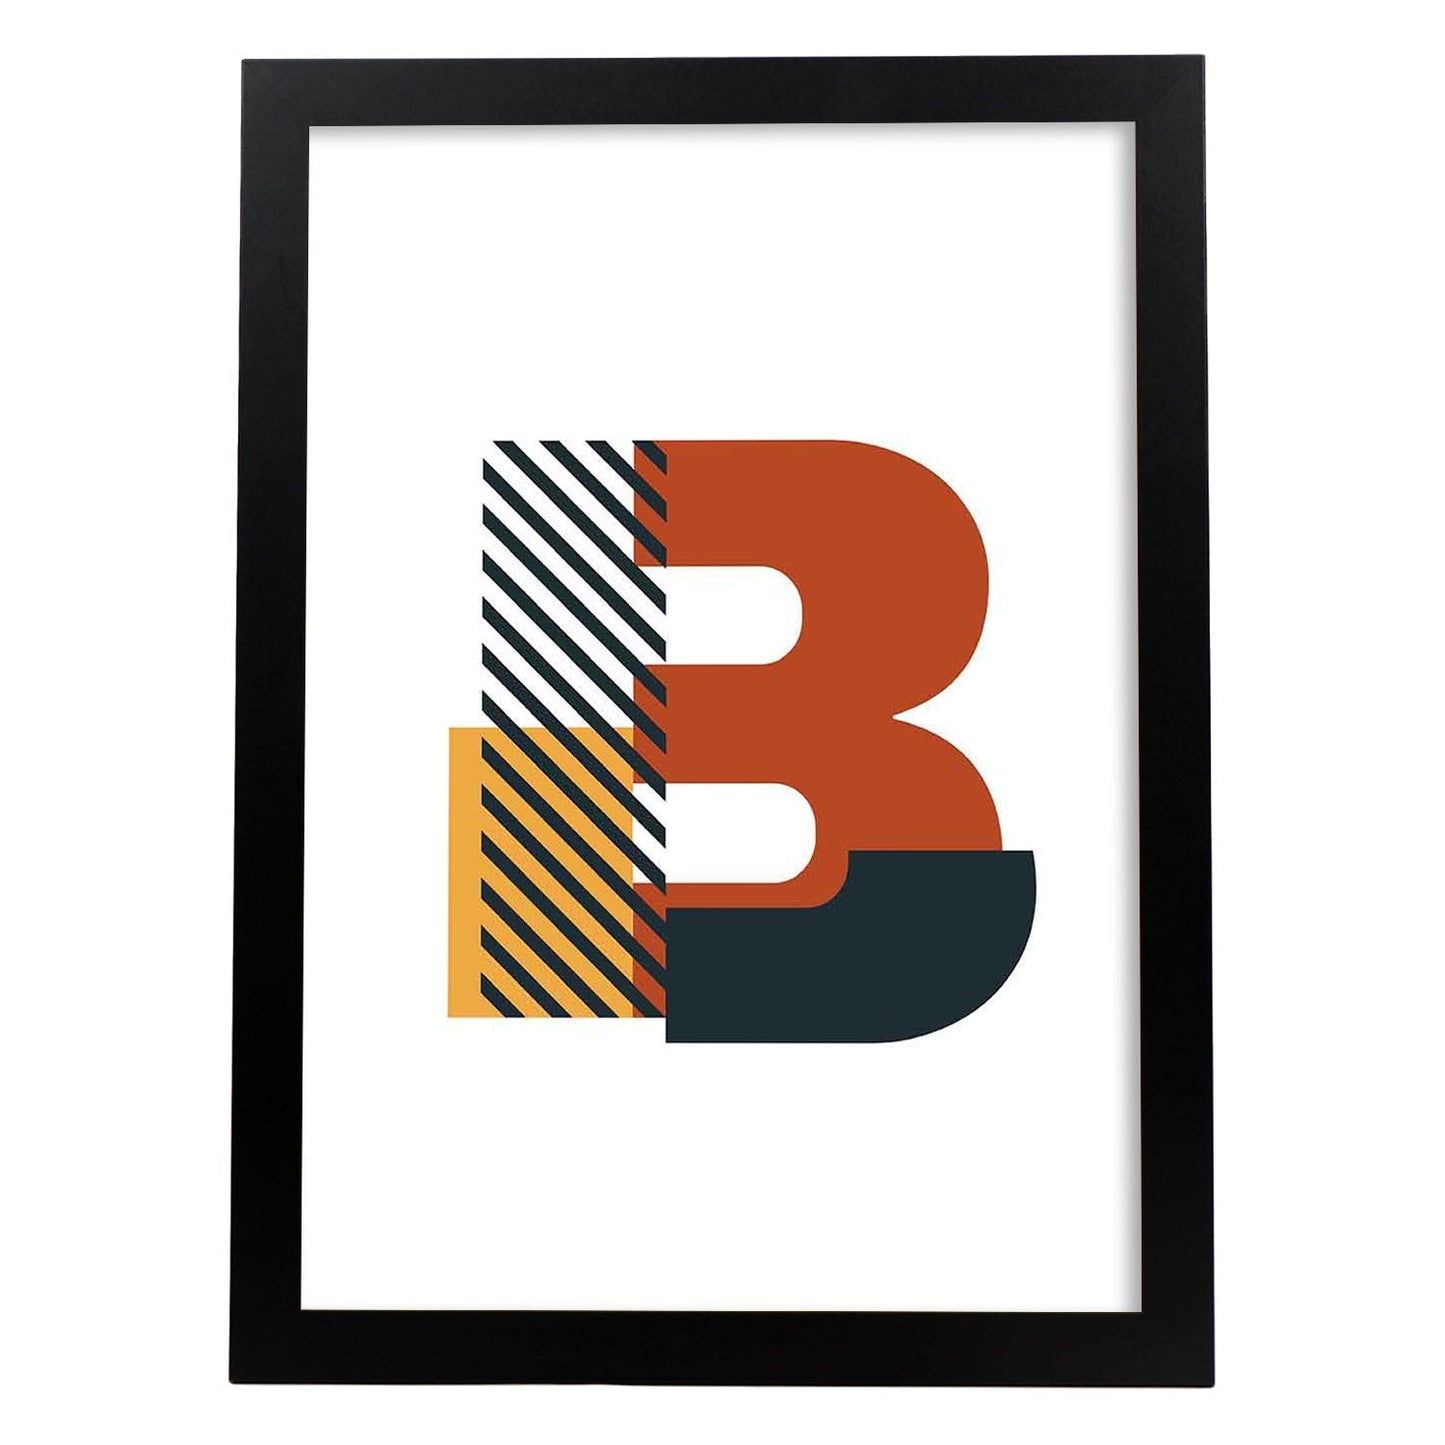 Poster de letra B. Lámina estilo Geometria con imágenes del alfabeto.-Artwork-Nacnic-A4-Marco Negro-Nacnic Estudio SL